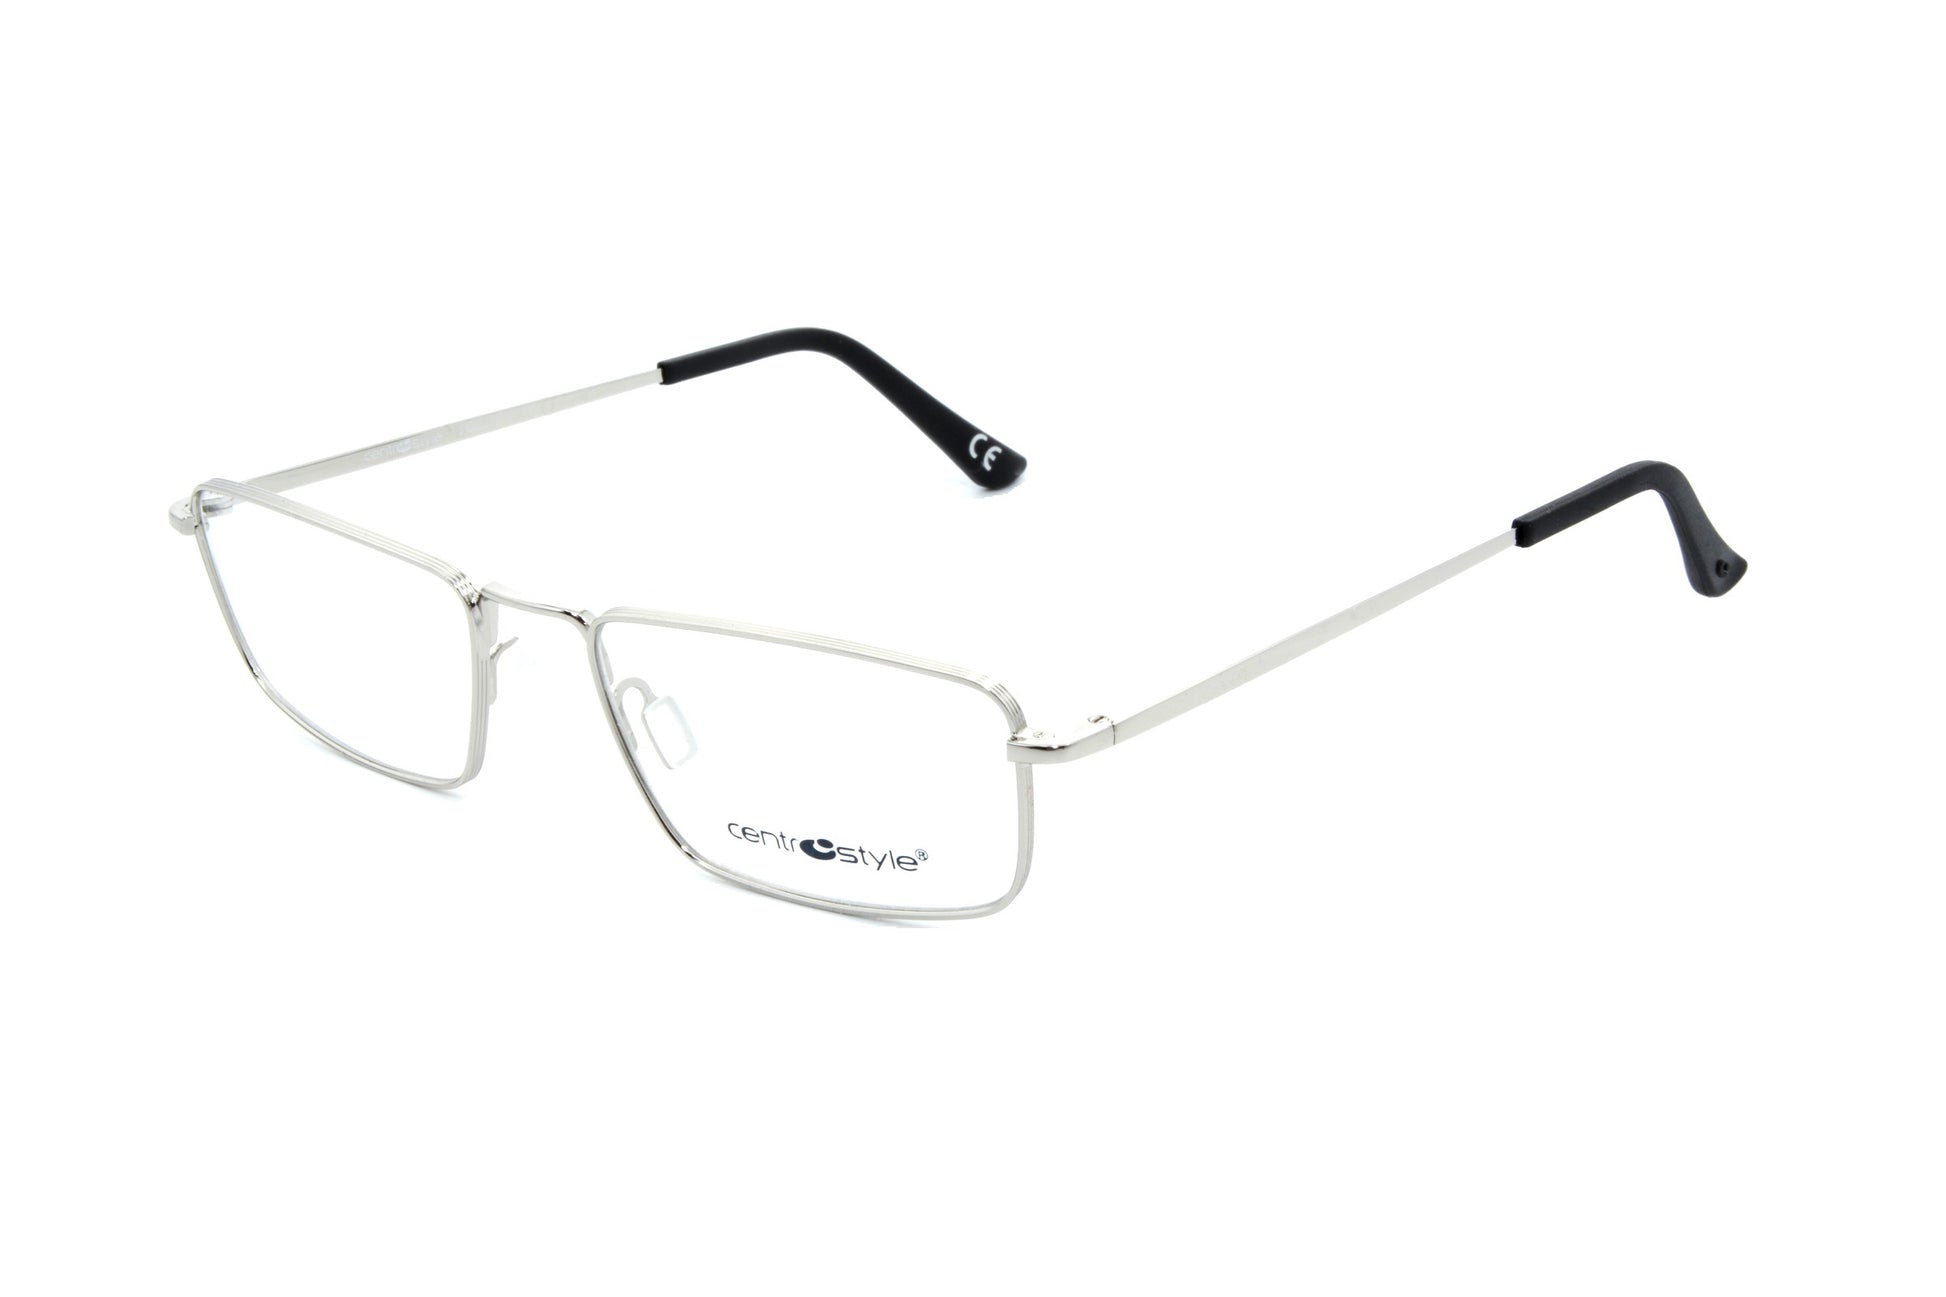 Centrostyle eyewear F030952017000